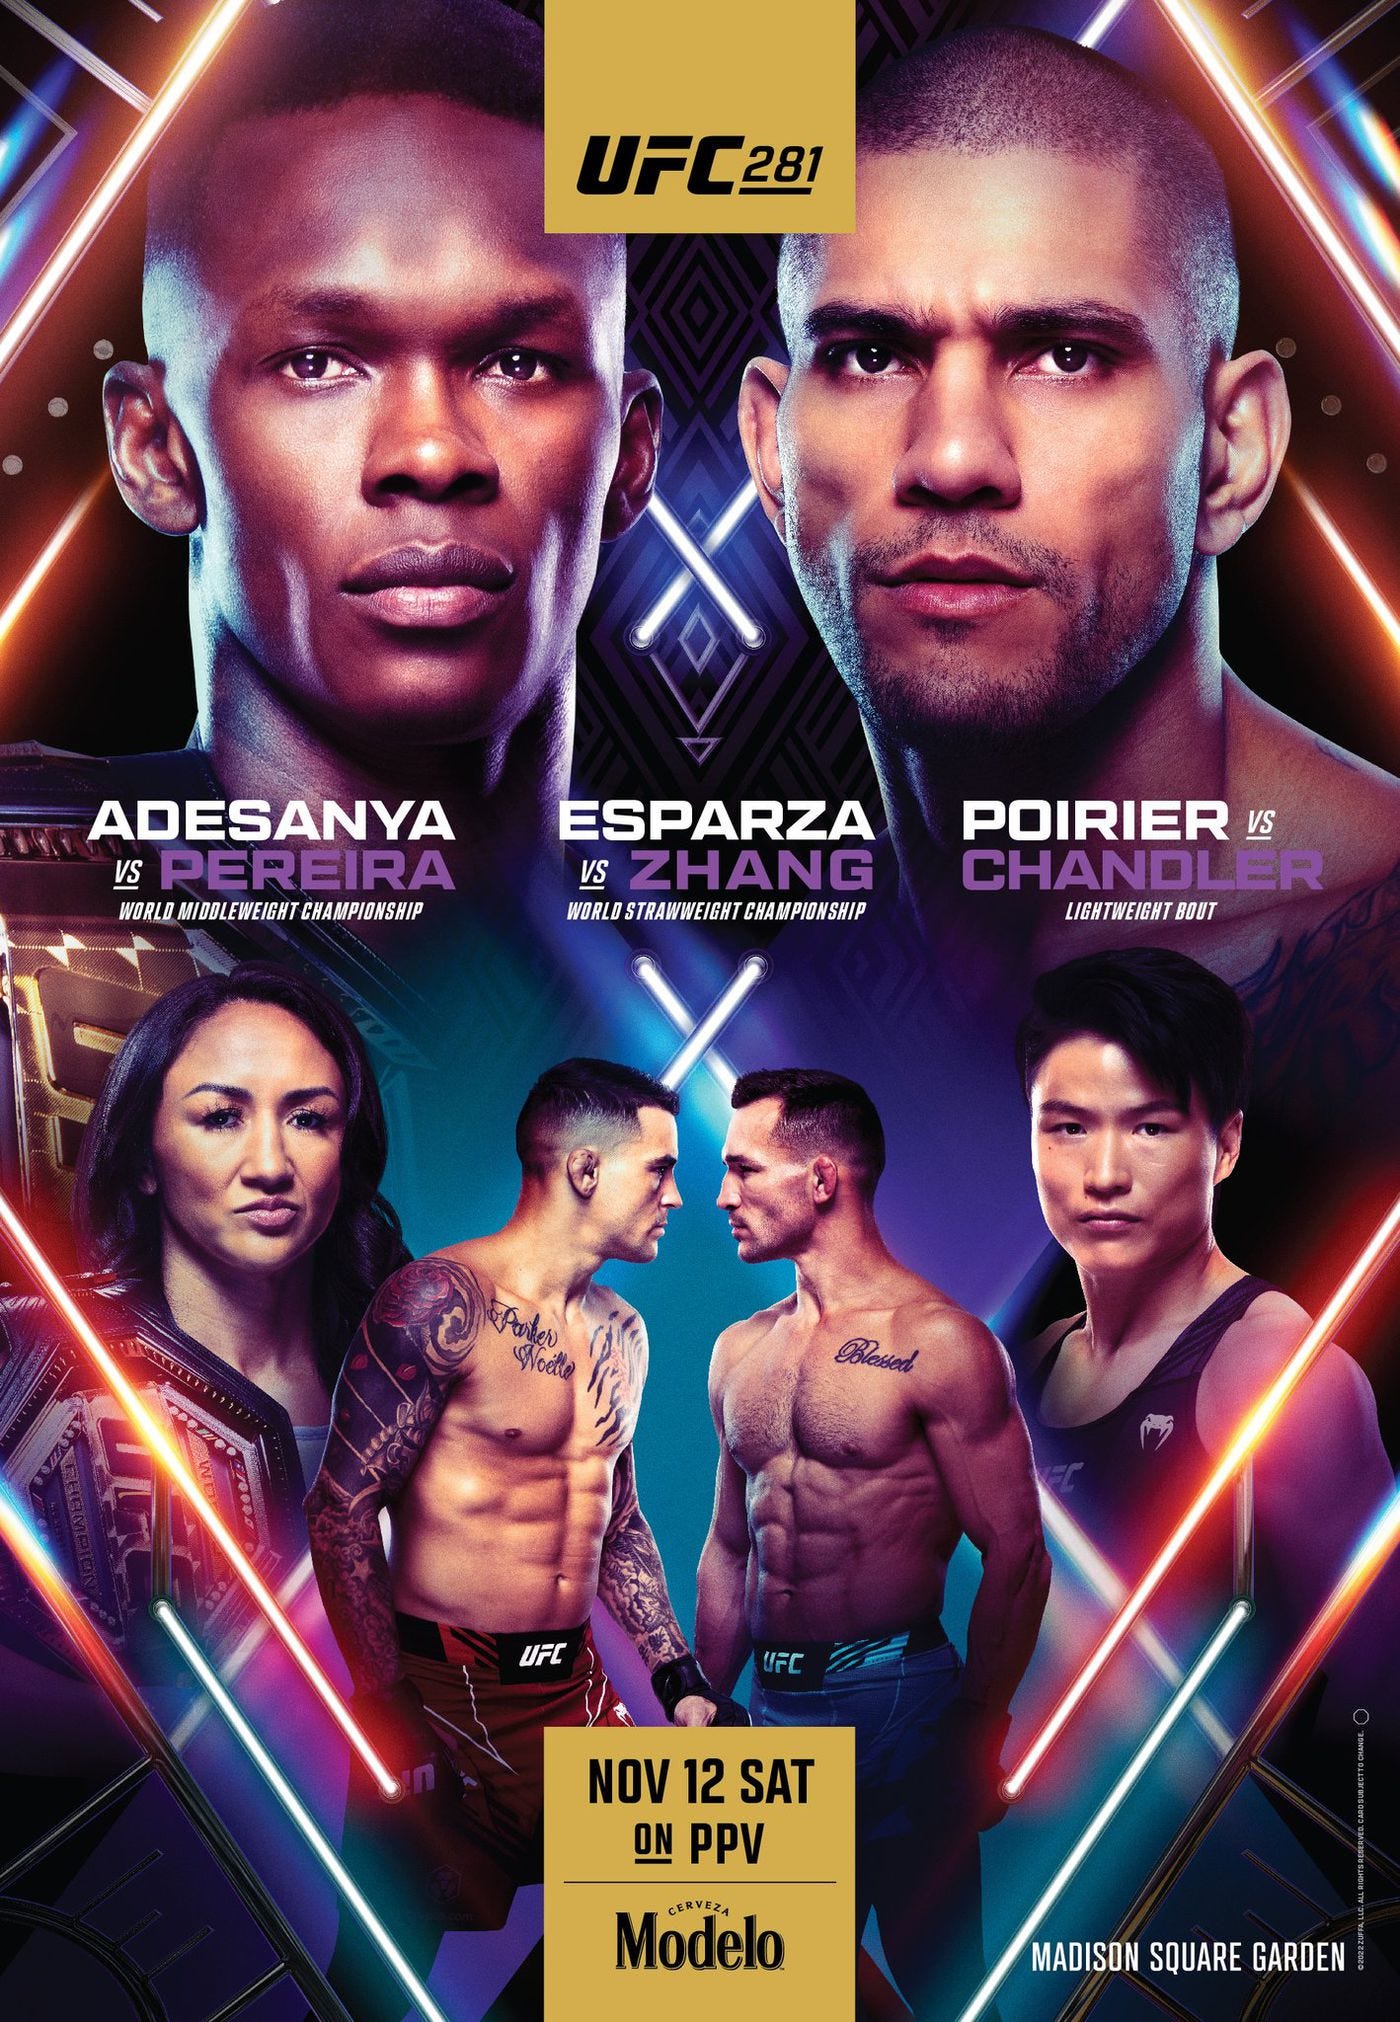 Attack of the interns! UFC 281 poster drops for 'Adesanya vs Pereira' in  New York - MMAmania.com